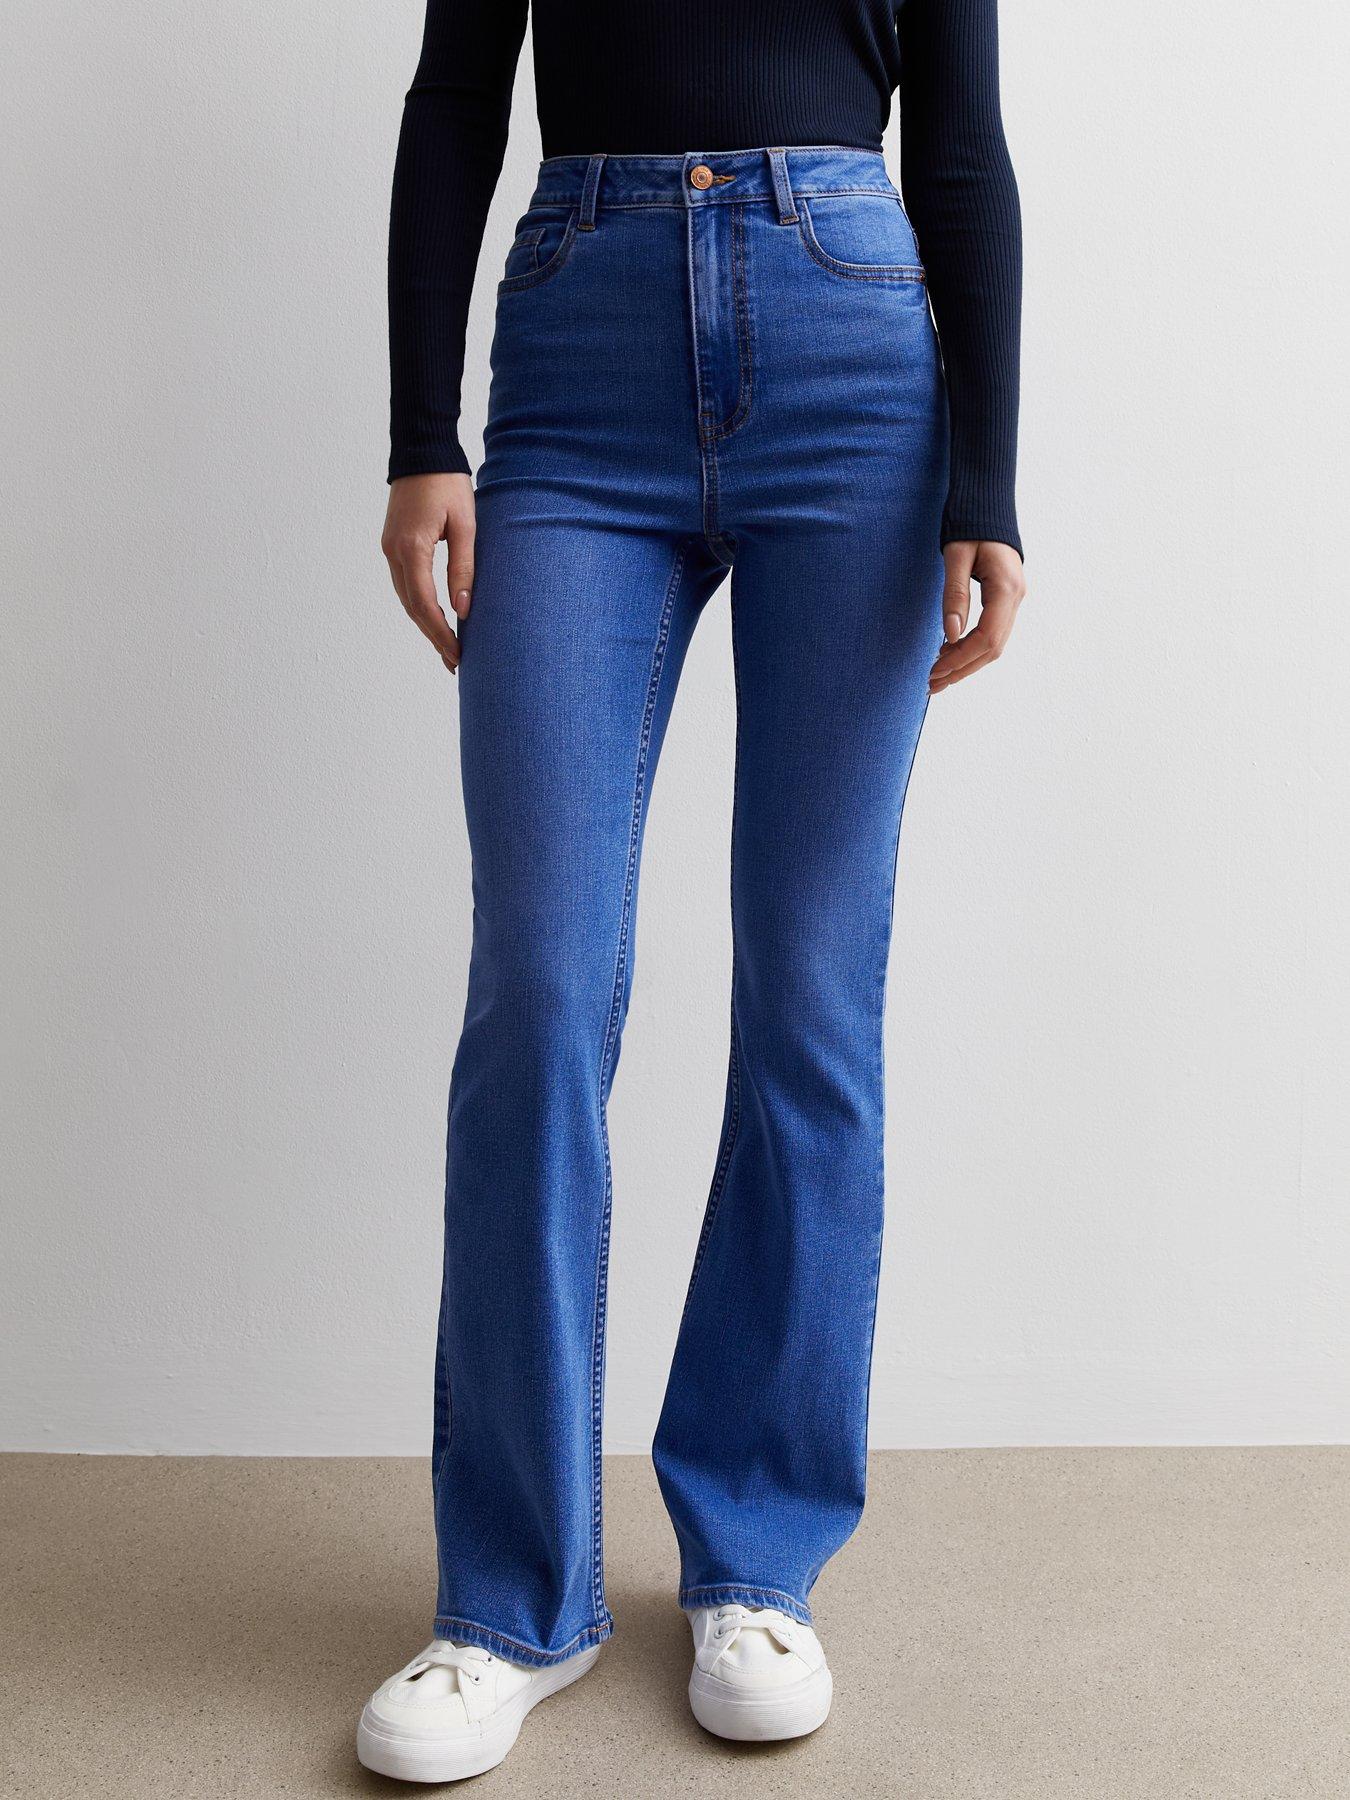 Sonoma 5-Pocket Design Boot Cut Jeans for Women